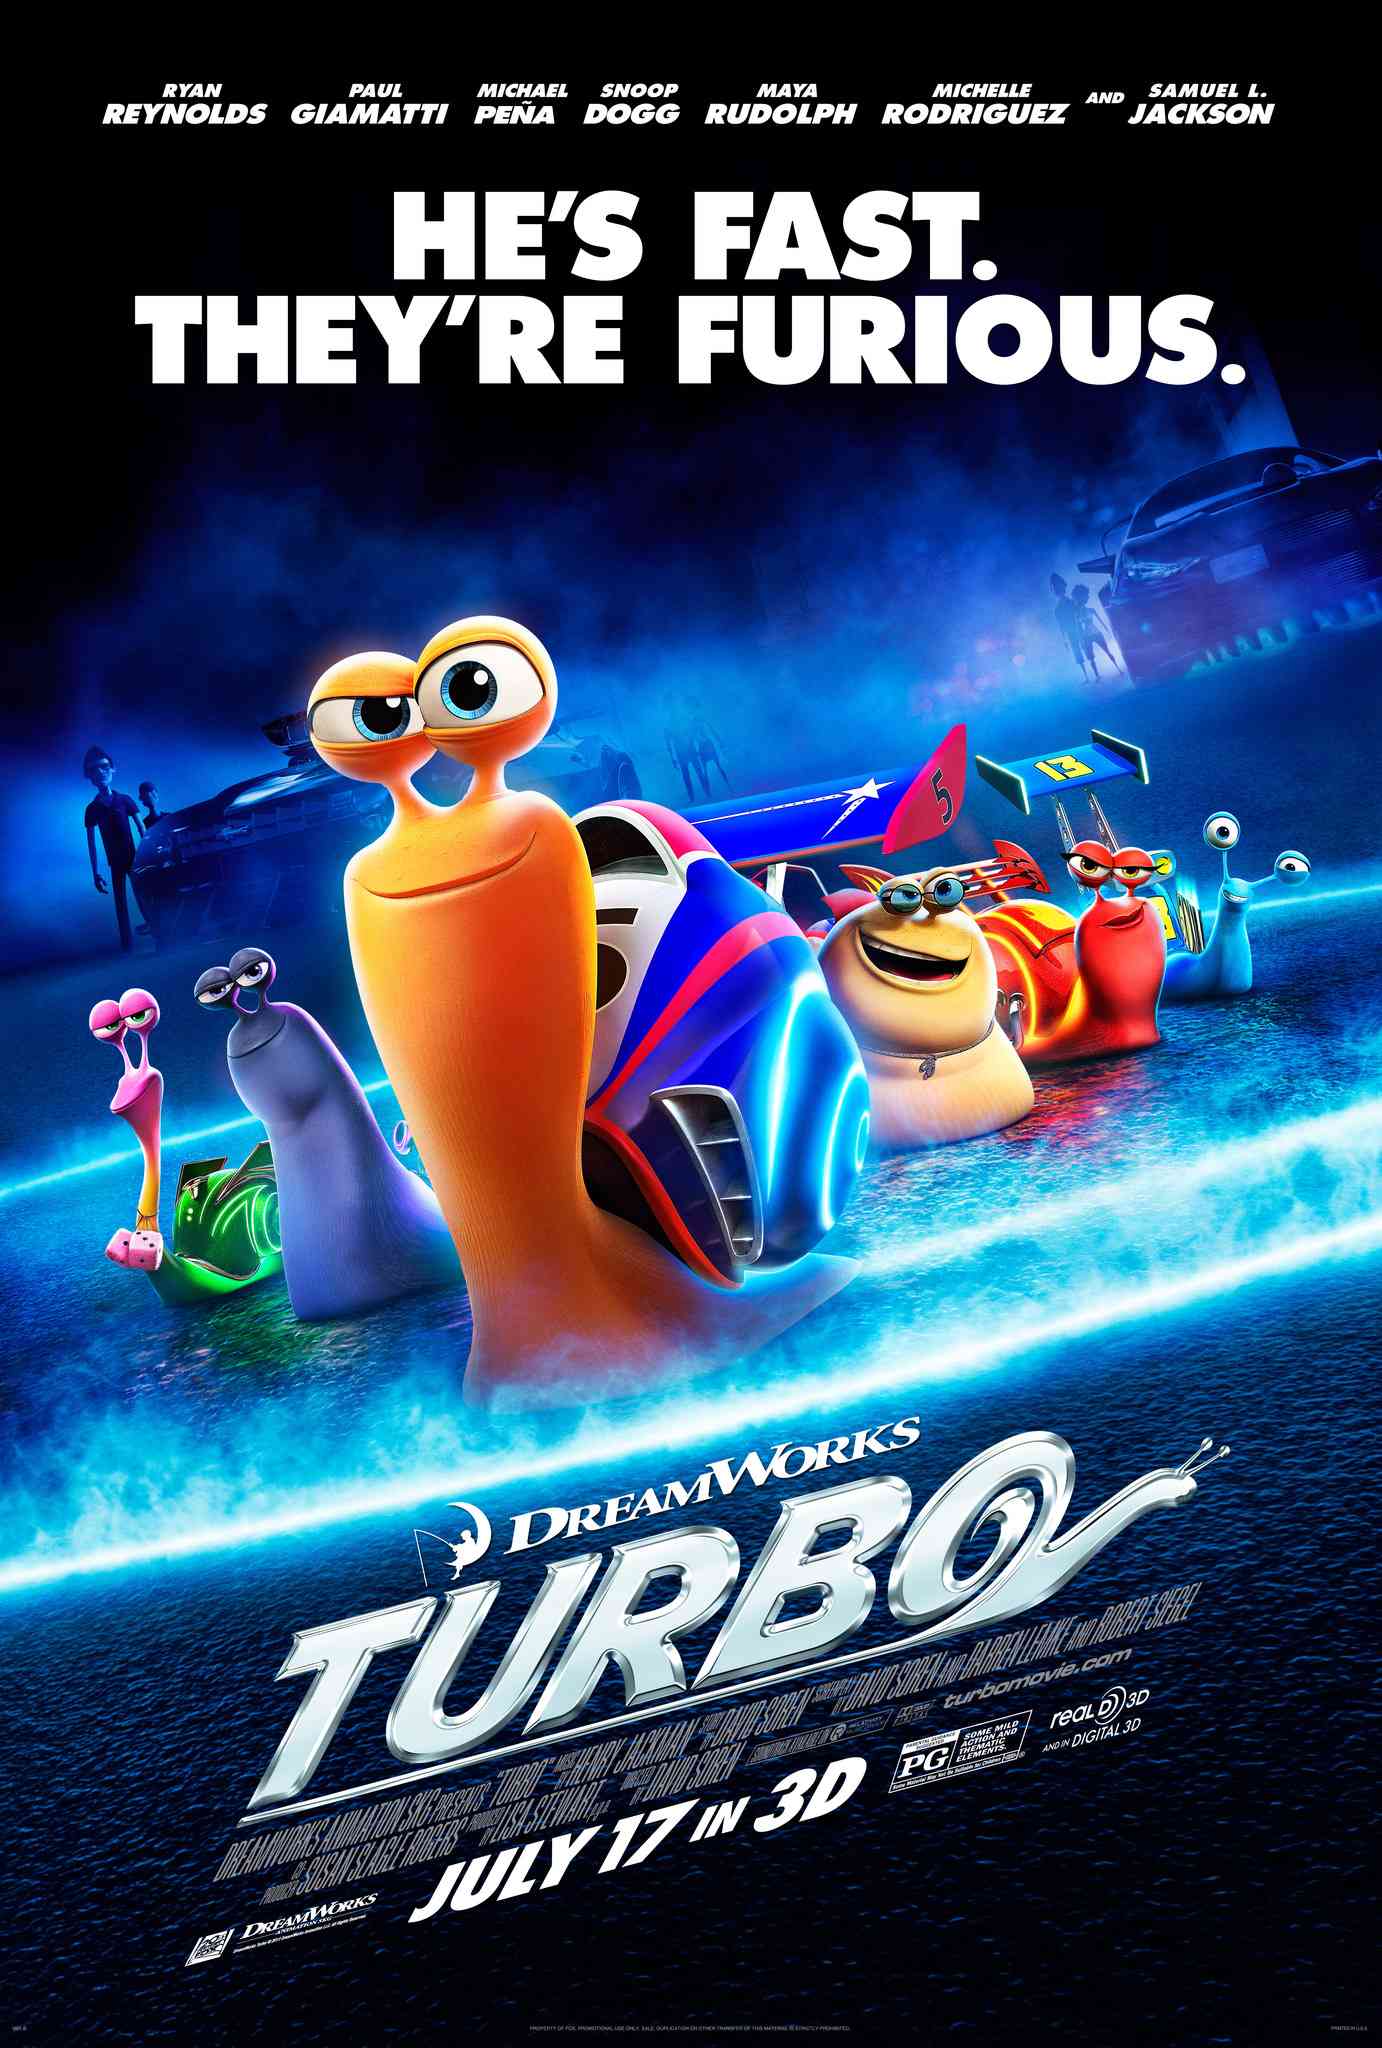 FULL MOVIE: Turbo (2013) [Animation]